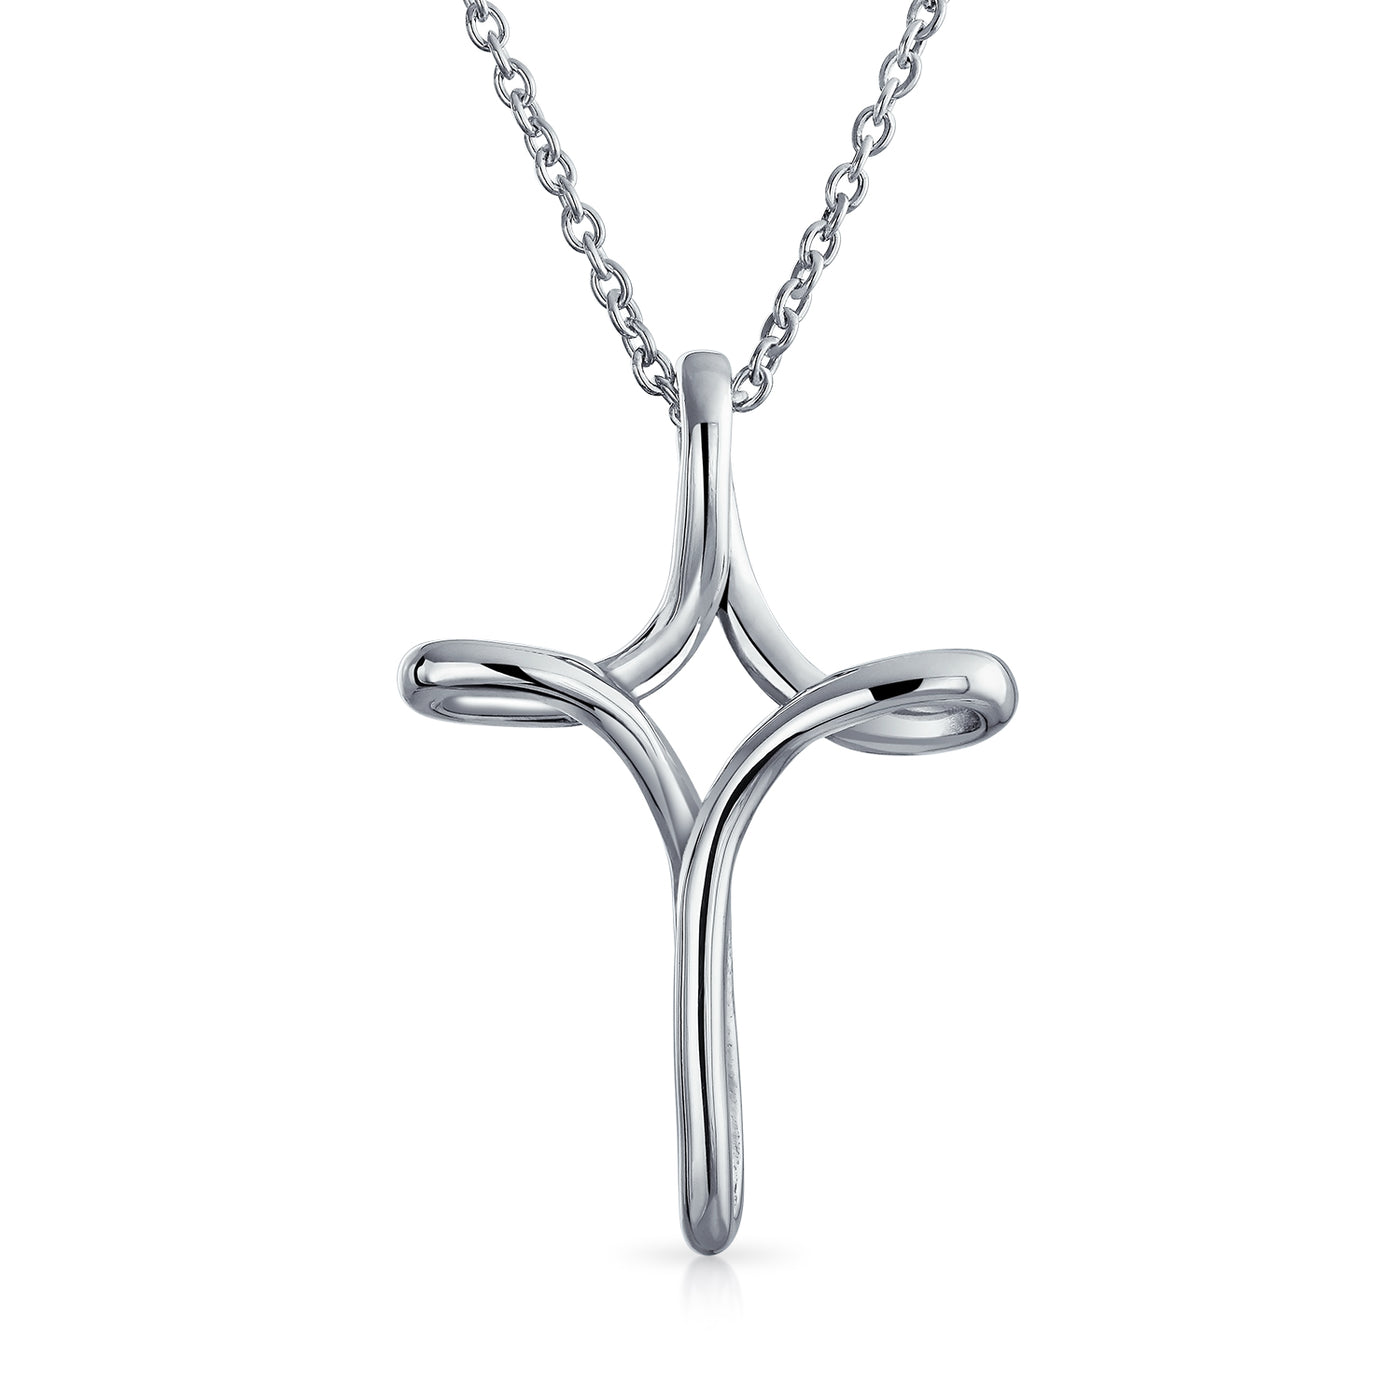 Infinity Twist Cross Pendant Necklace Plain Sterling Silver Chain 1in